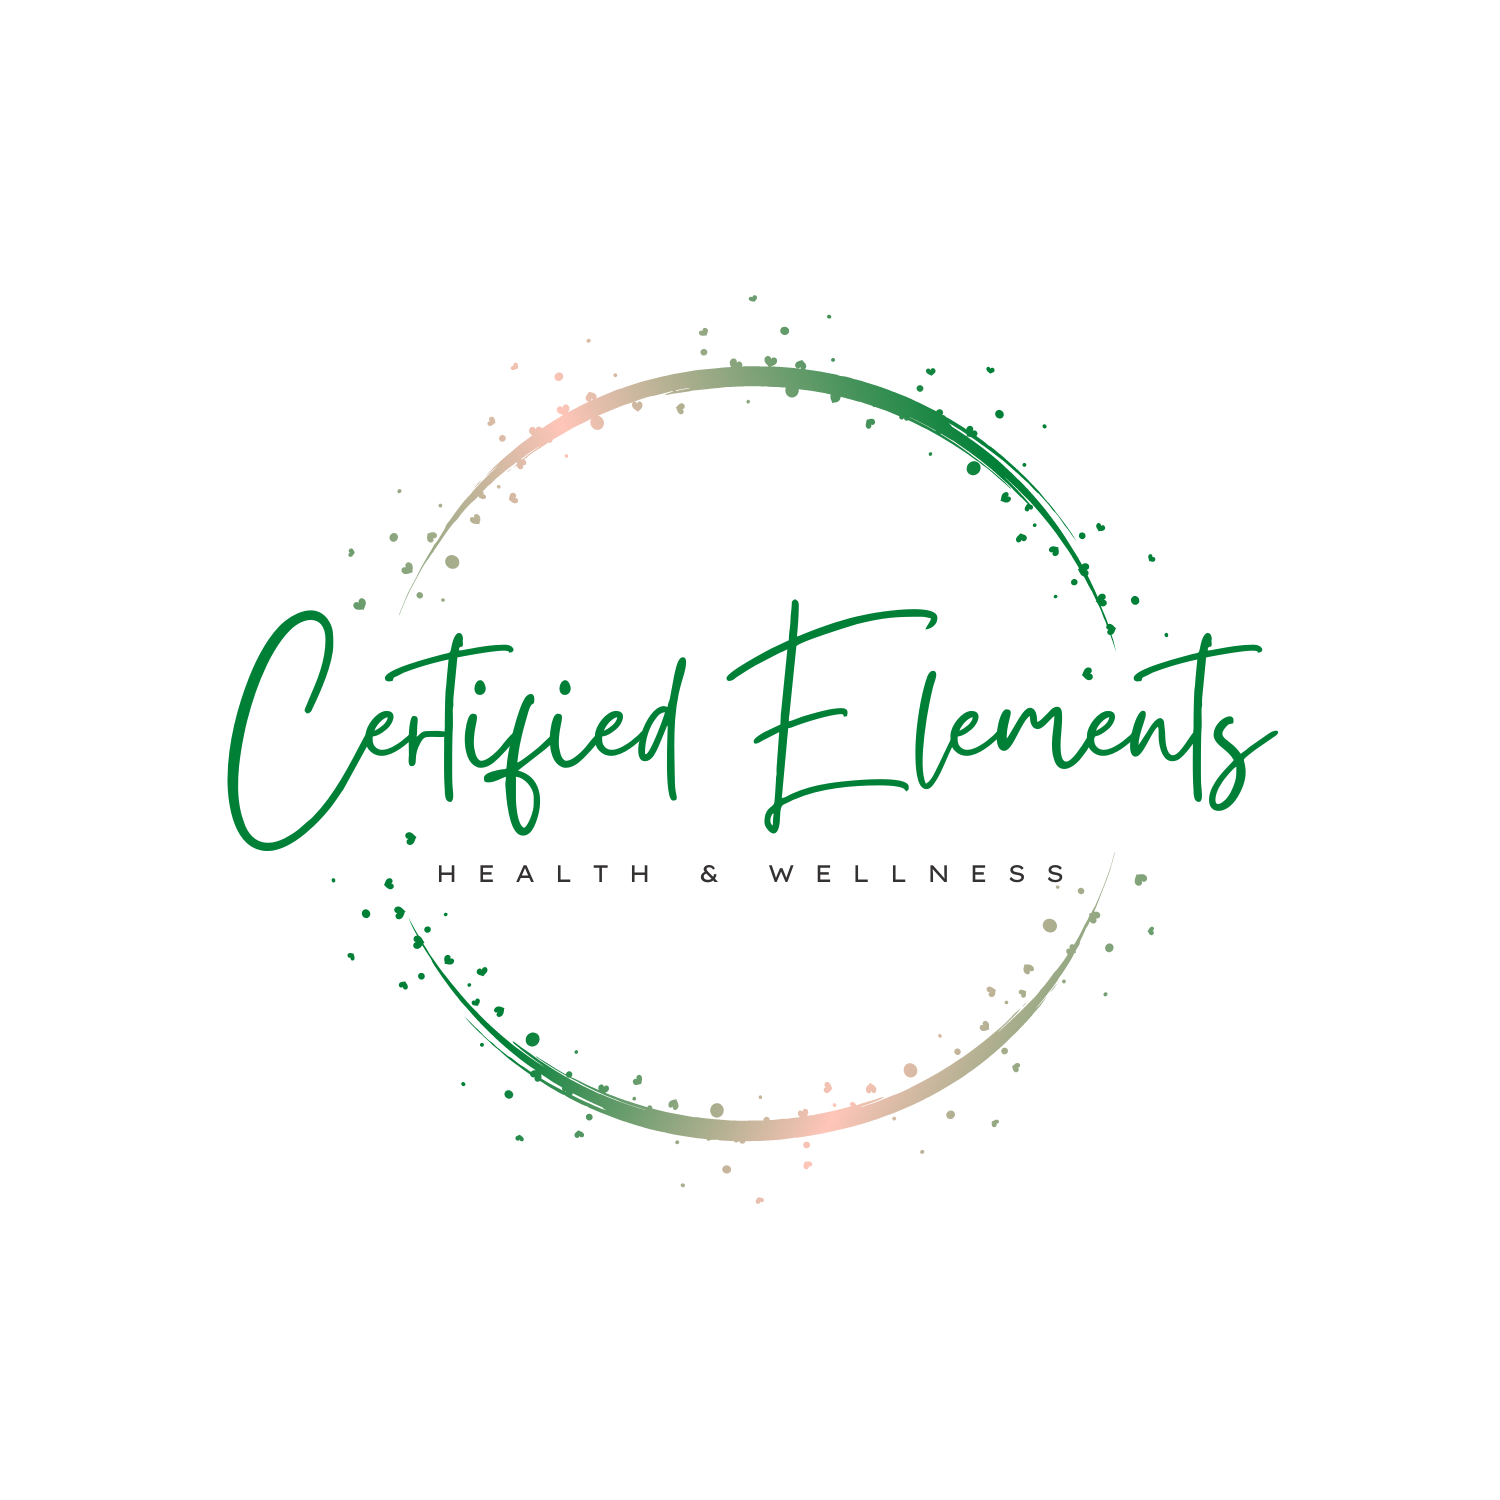 Certified Elements